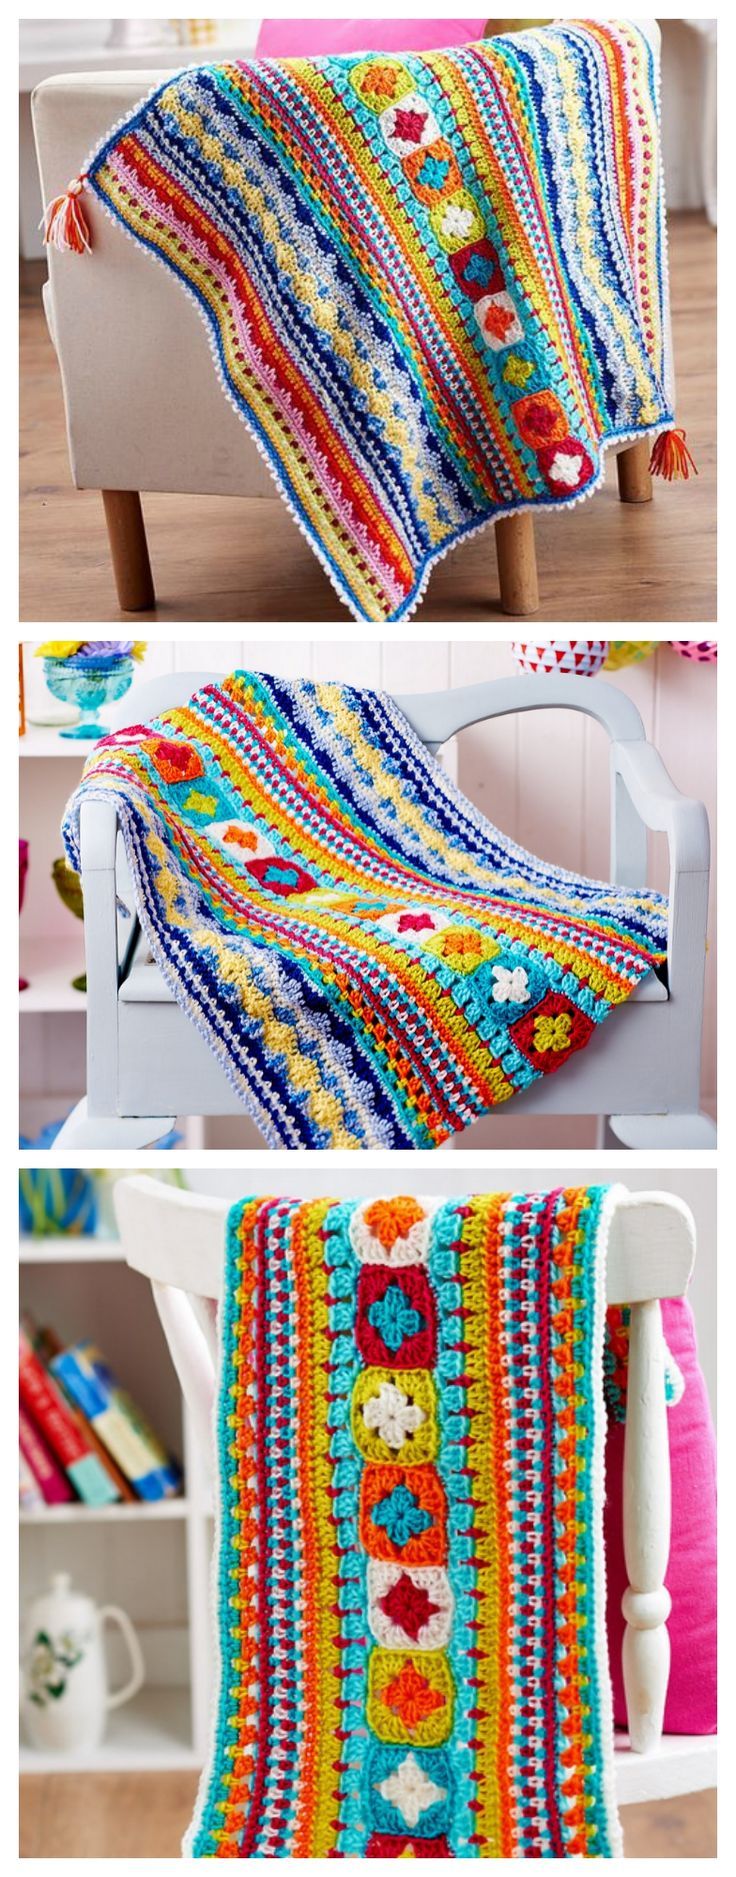 Sampler Blanket By Janine Holmes - Free Crochet Pattern With Website Registratio...